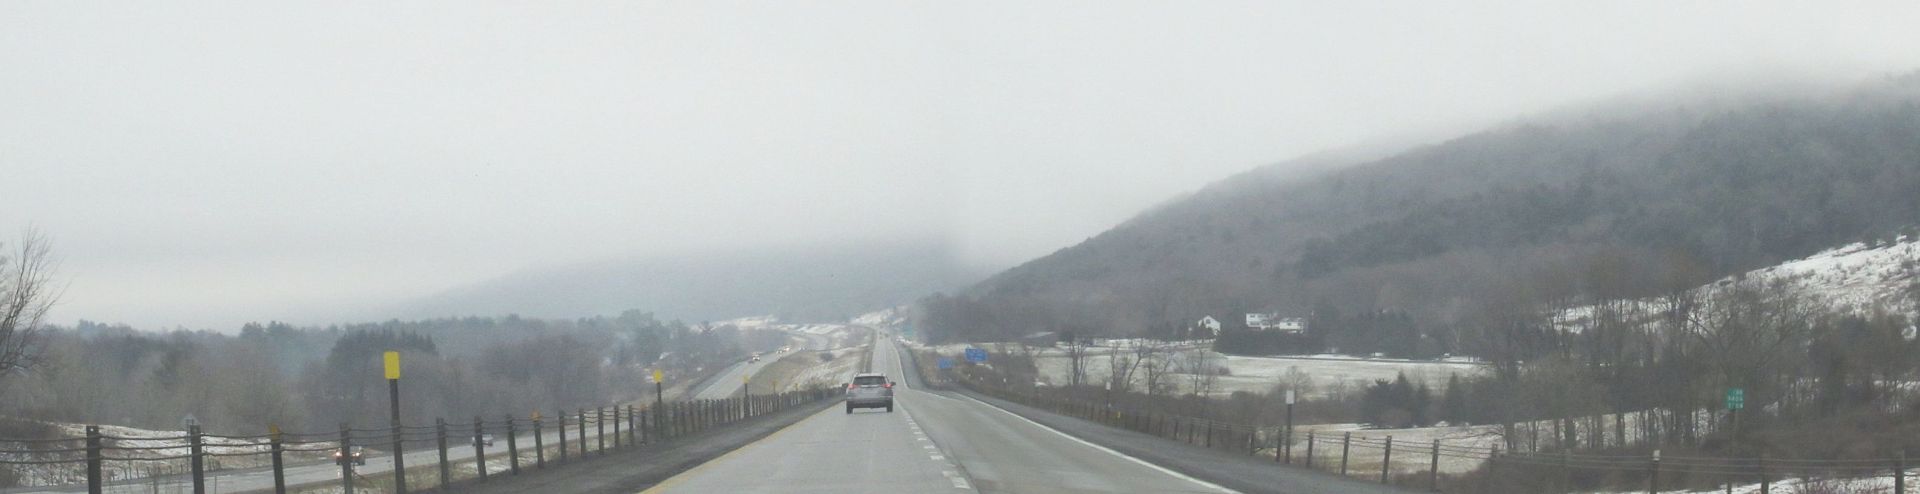 New York State Interstate Highway